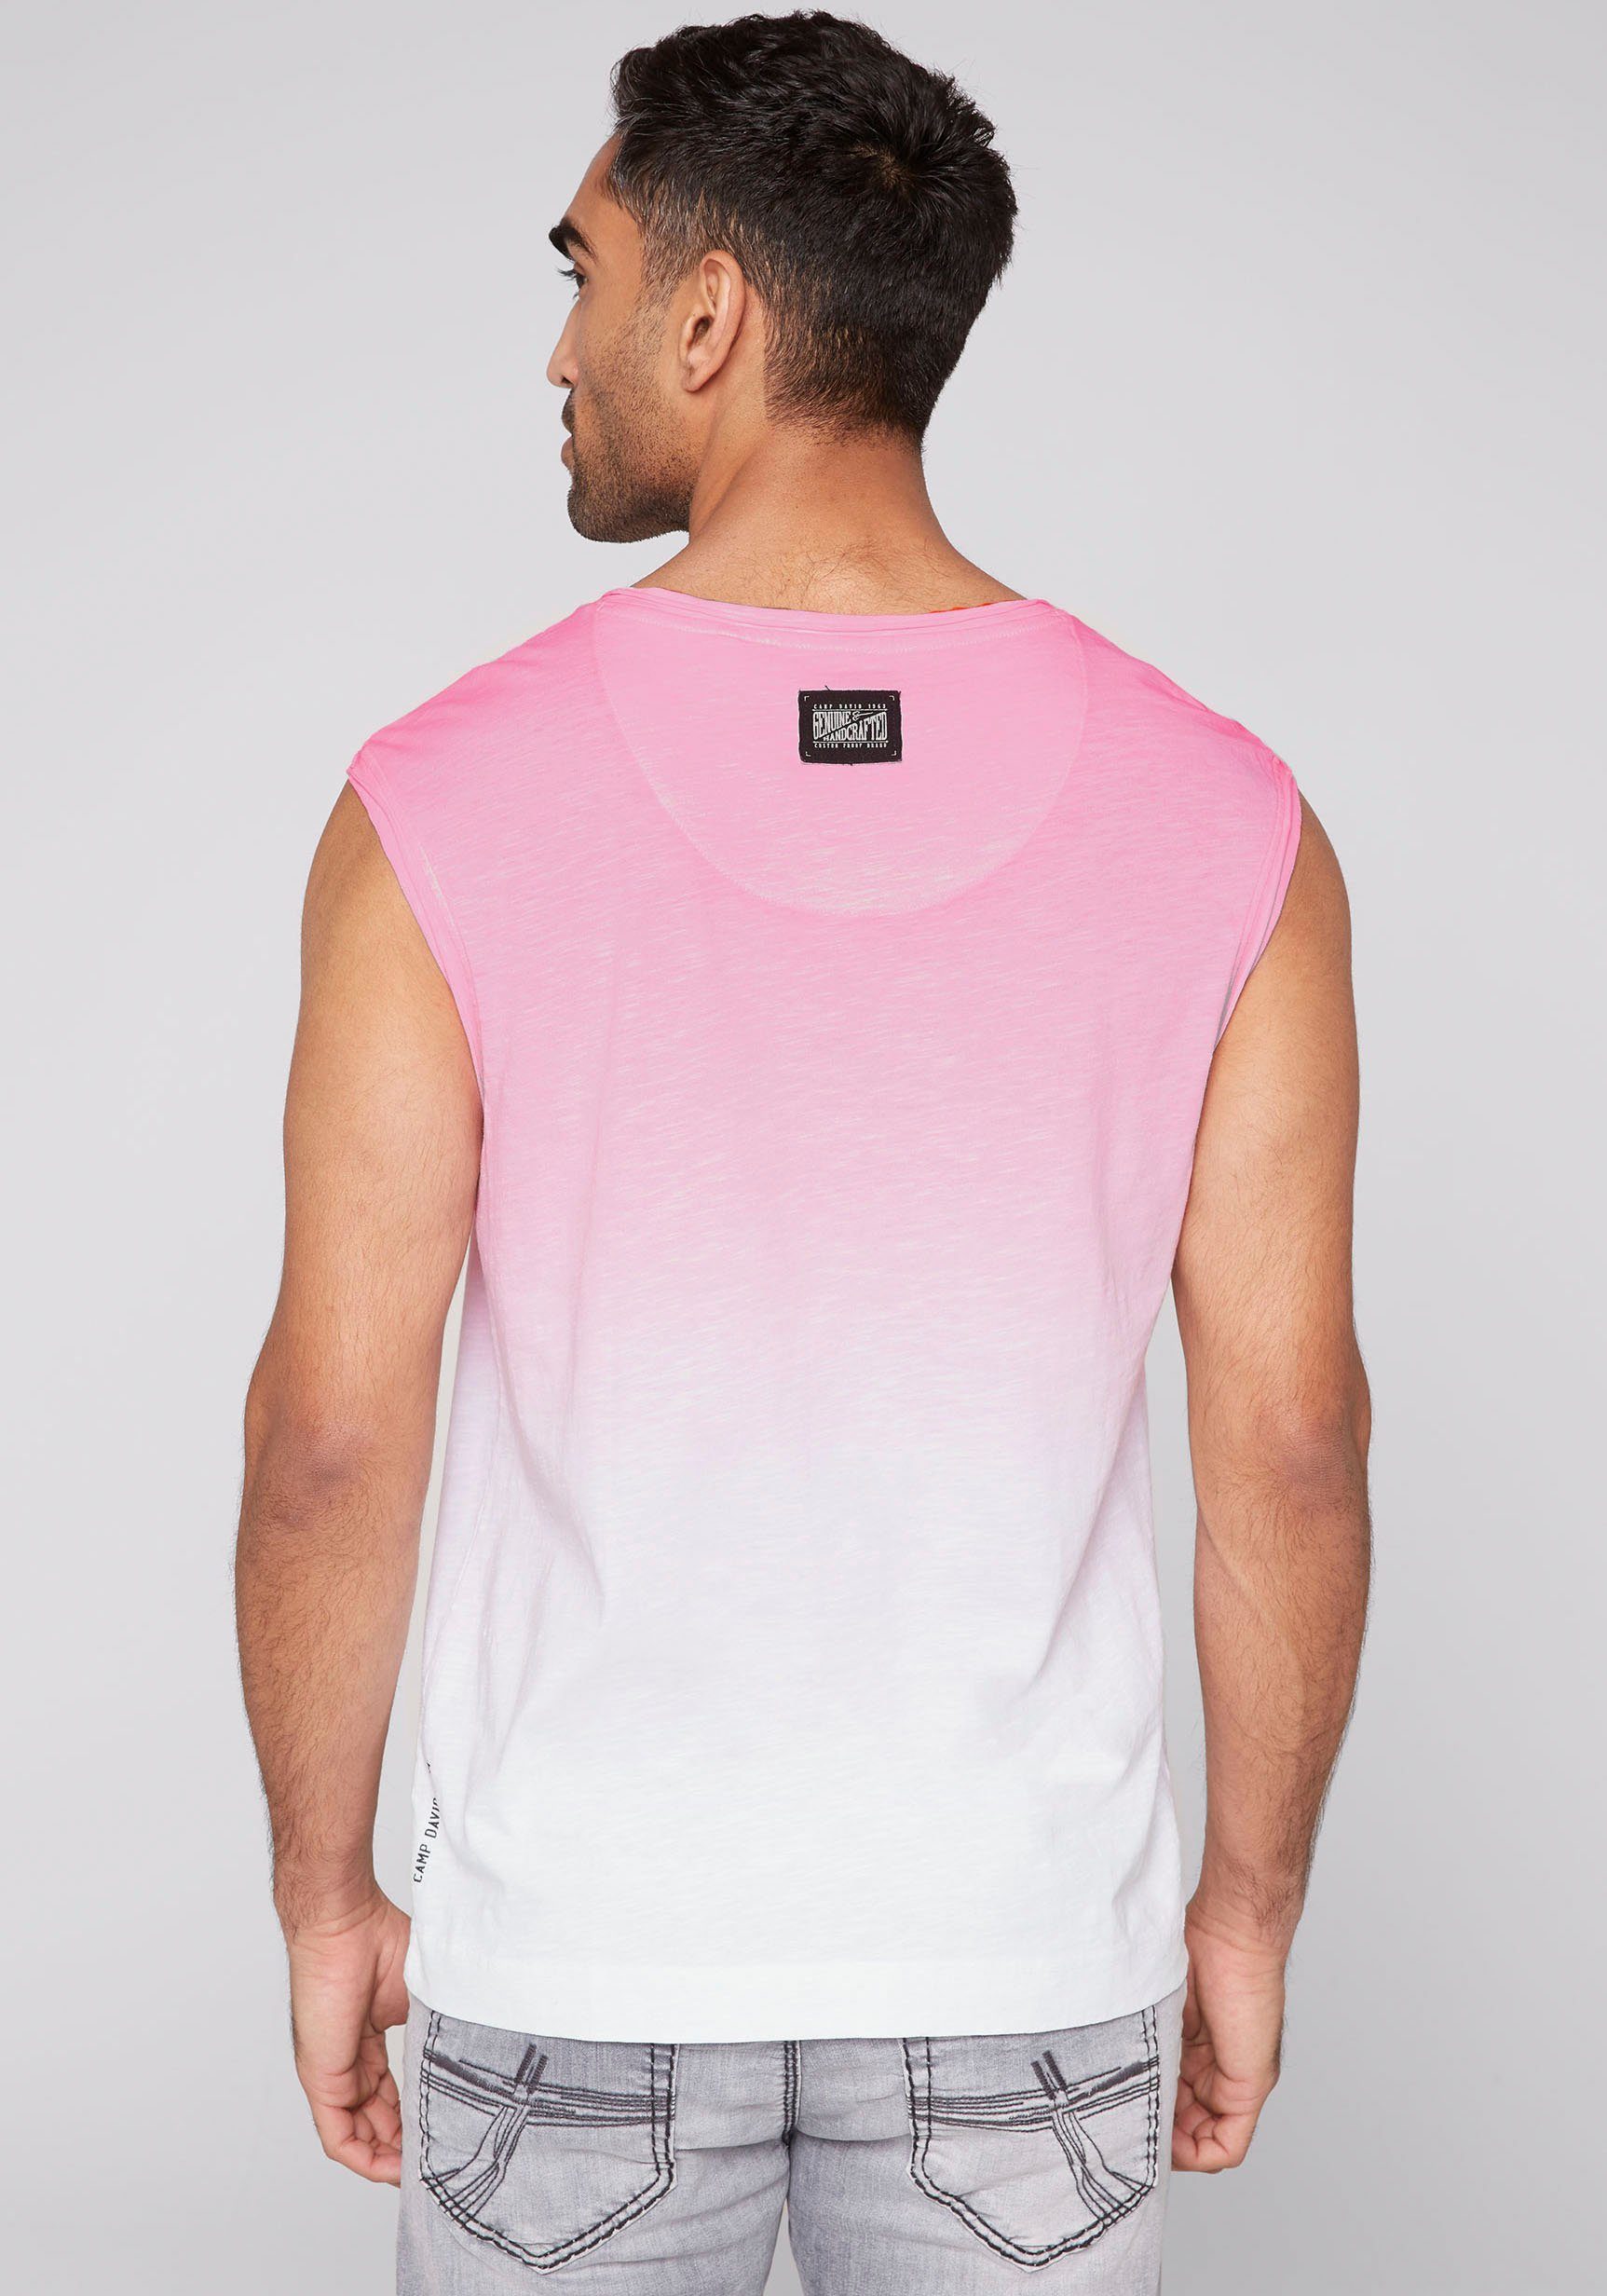 CAMP pink V-Shirt DAVID opticwhite / neon